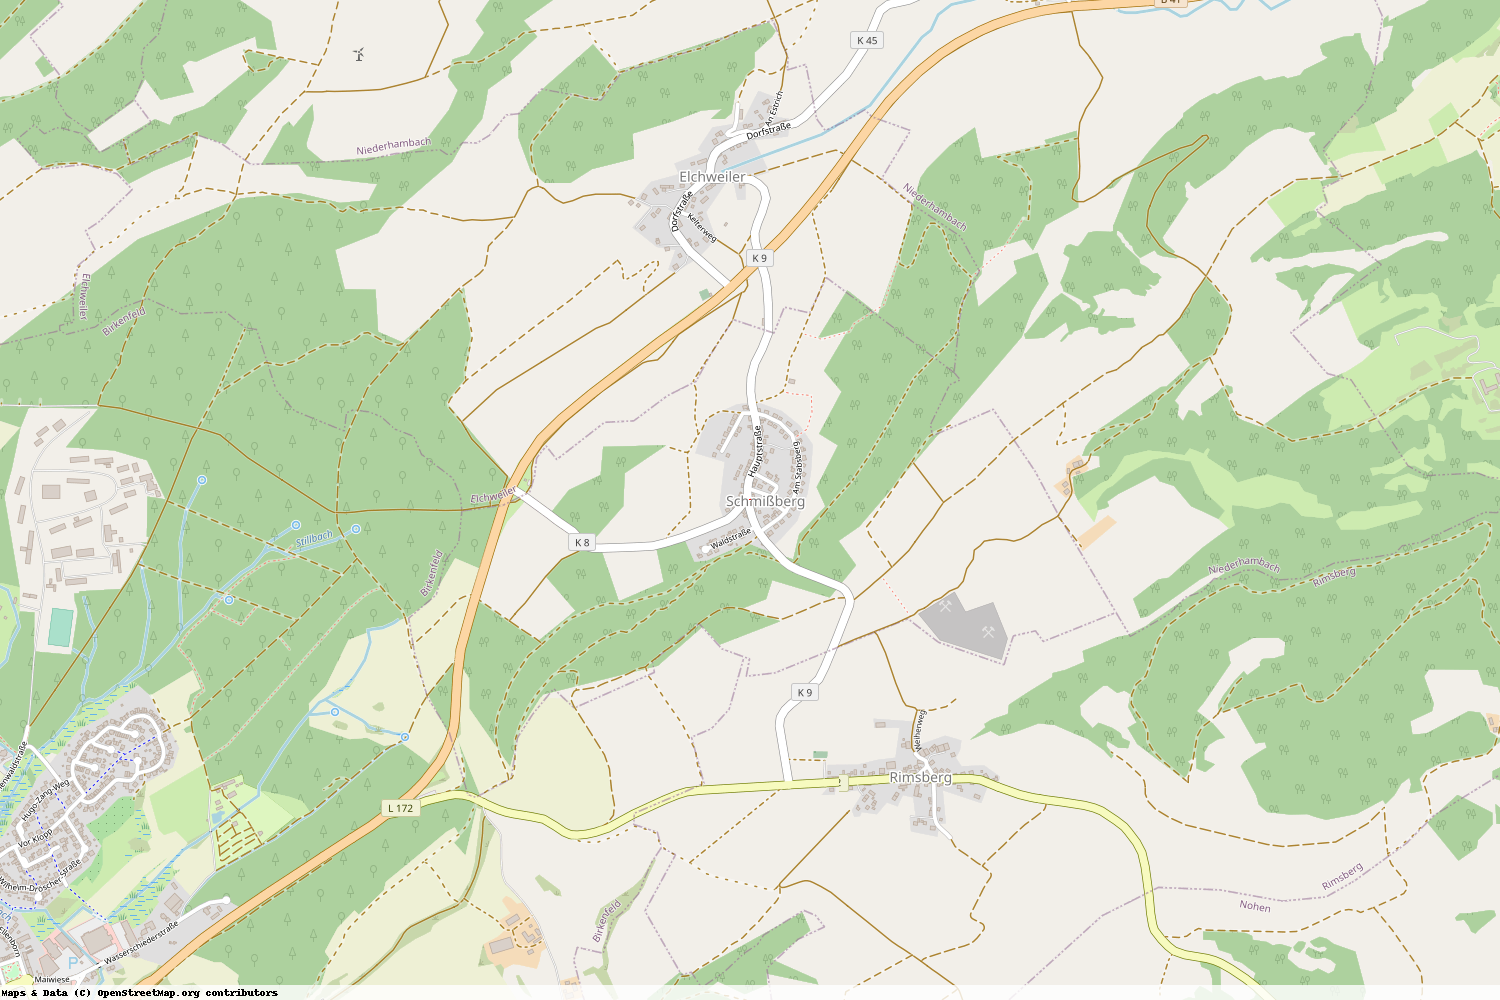 Ist gerade Stromausfall in Rheinland-Pfalz - Birkenfeld - Schmißberg?